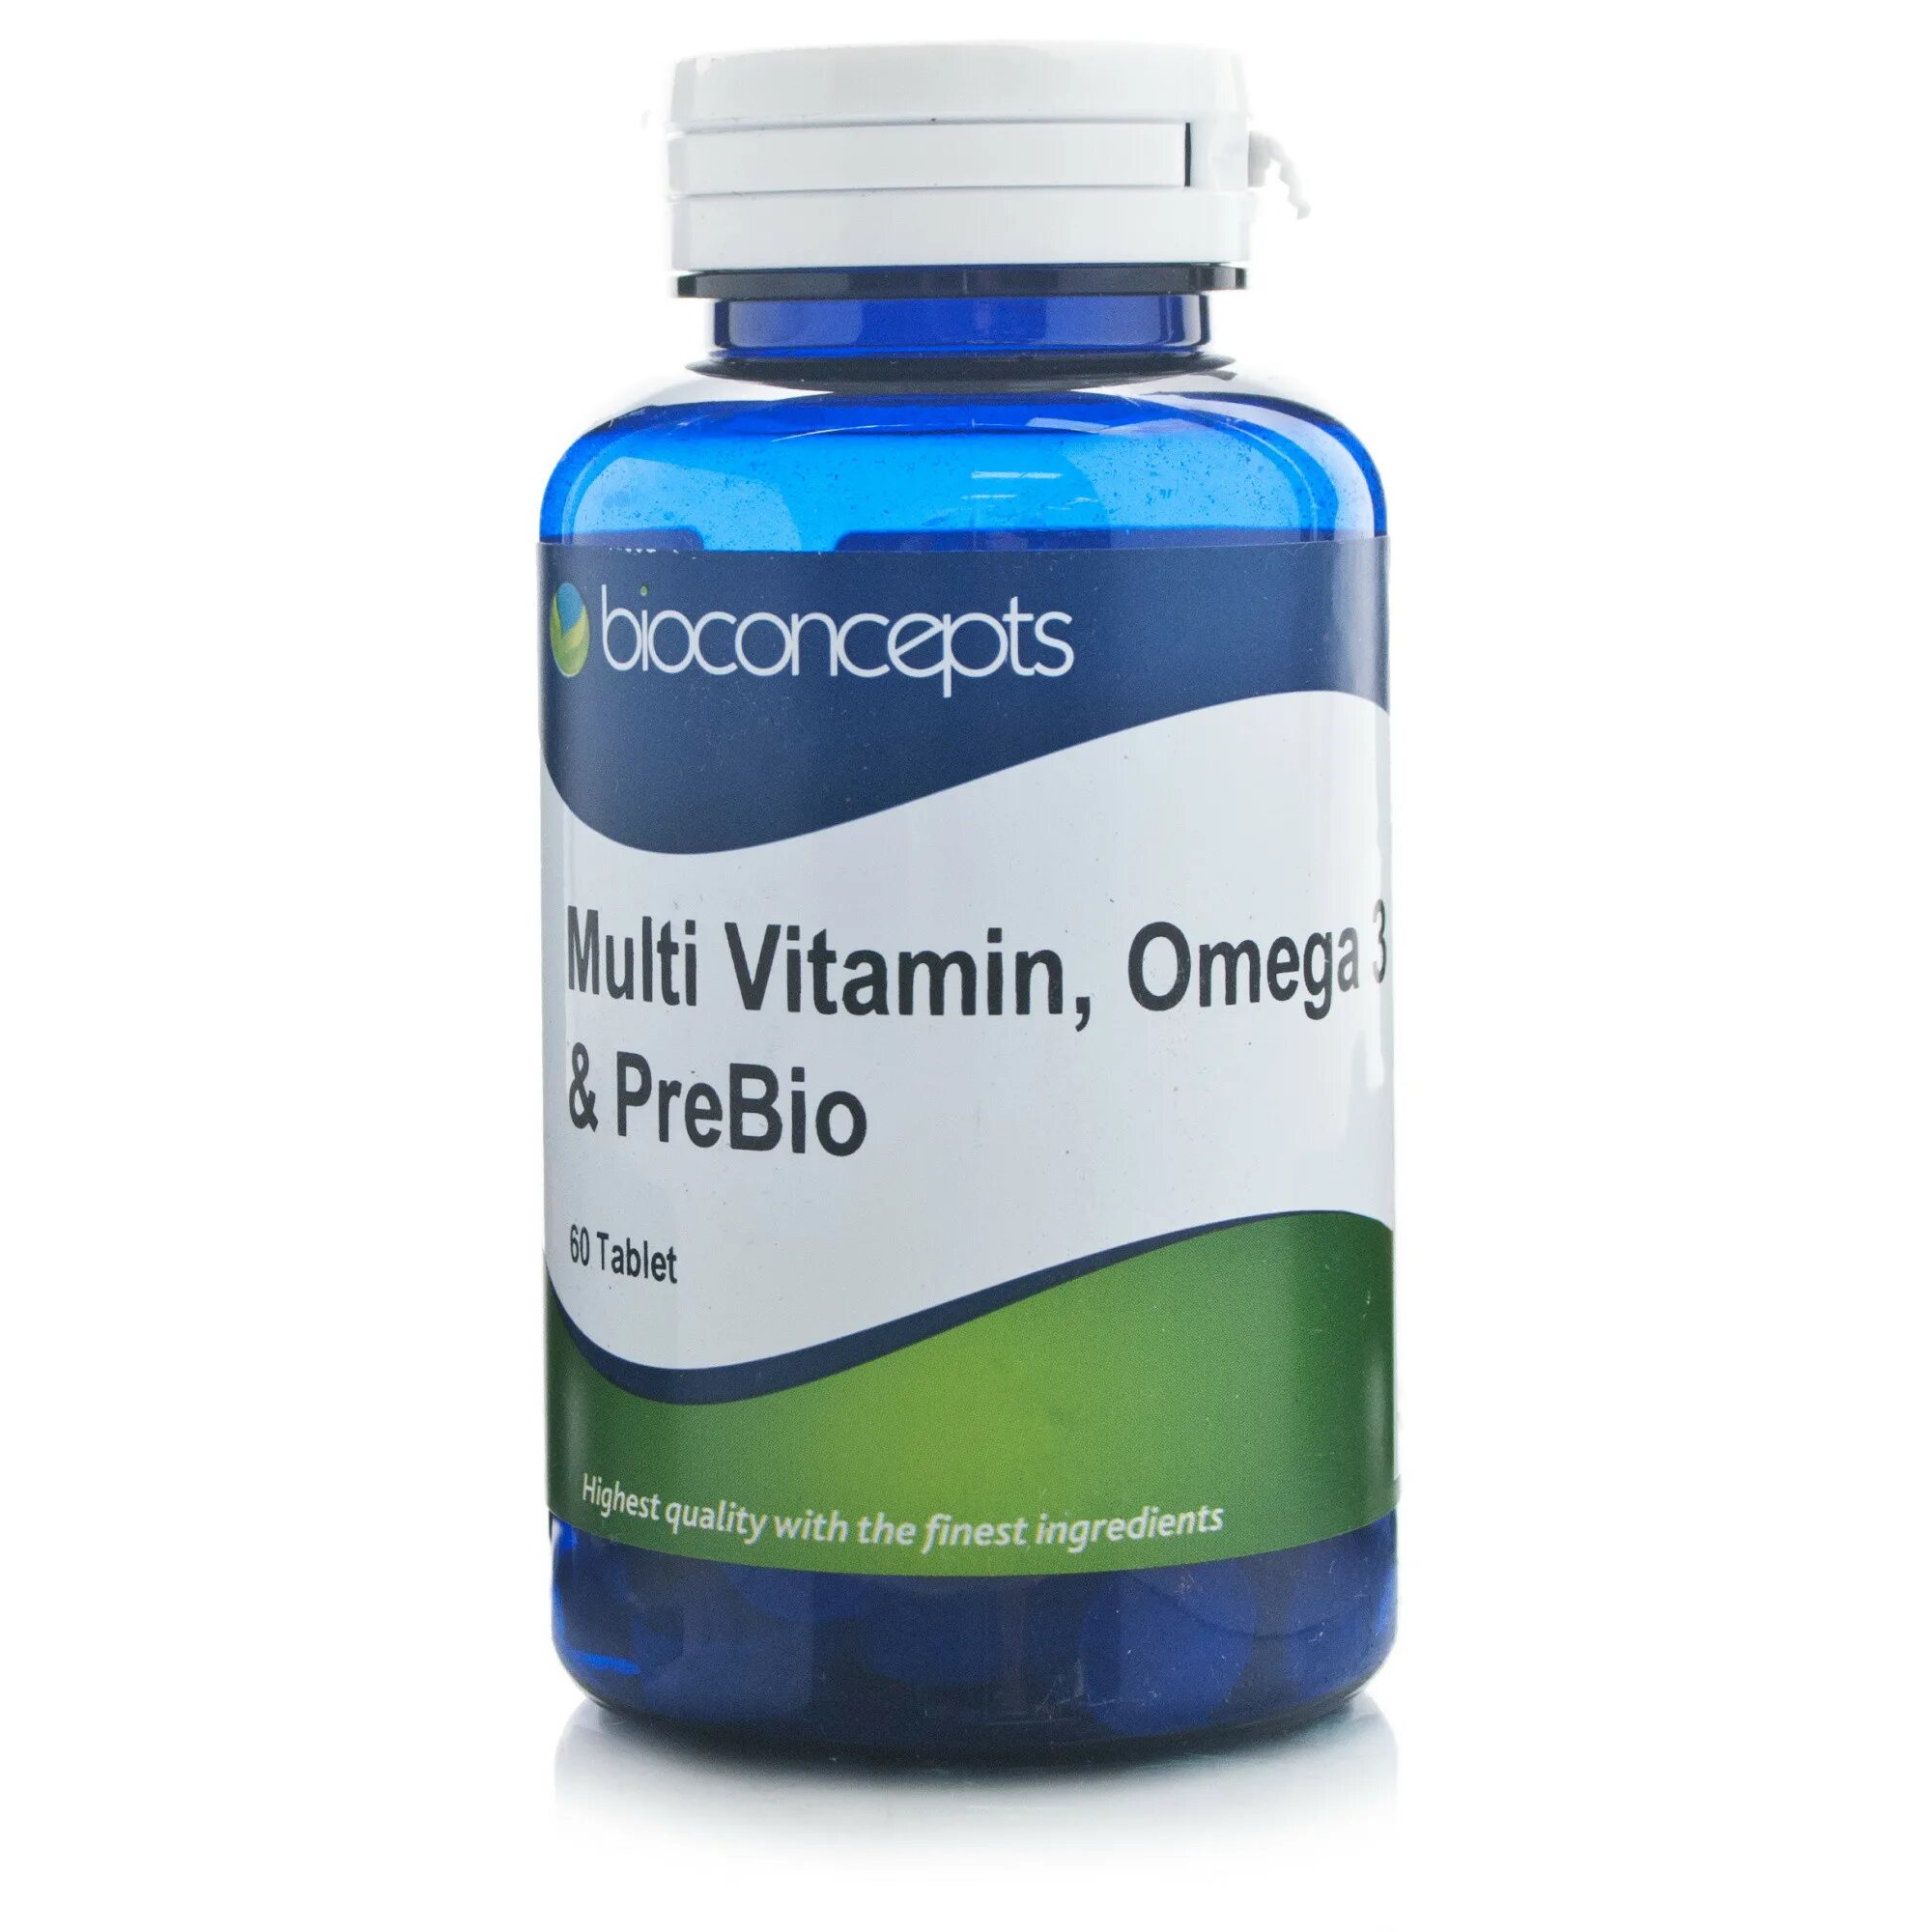 Омега 6 витамины. Multivitamin Omega 3. Dam Omega-3 Multi Vitamin. Жевательные таблетки Омега 3. Омега 6 аптека